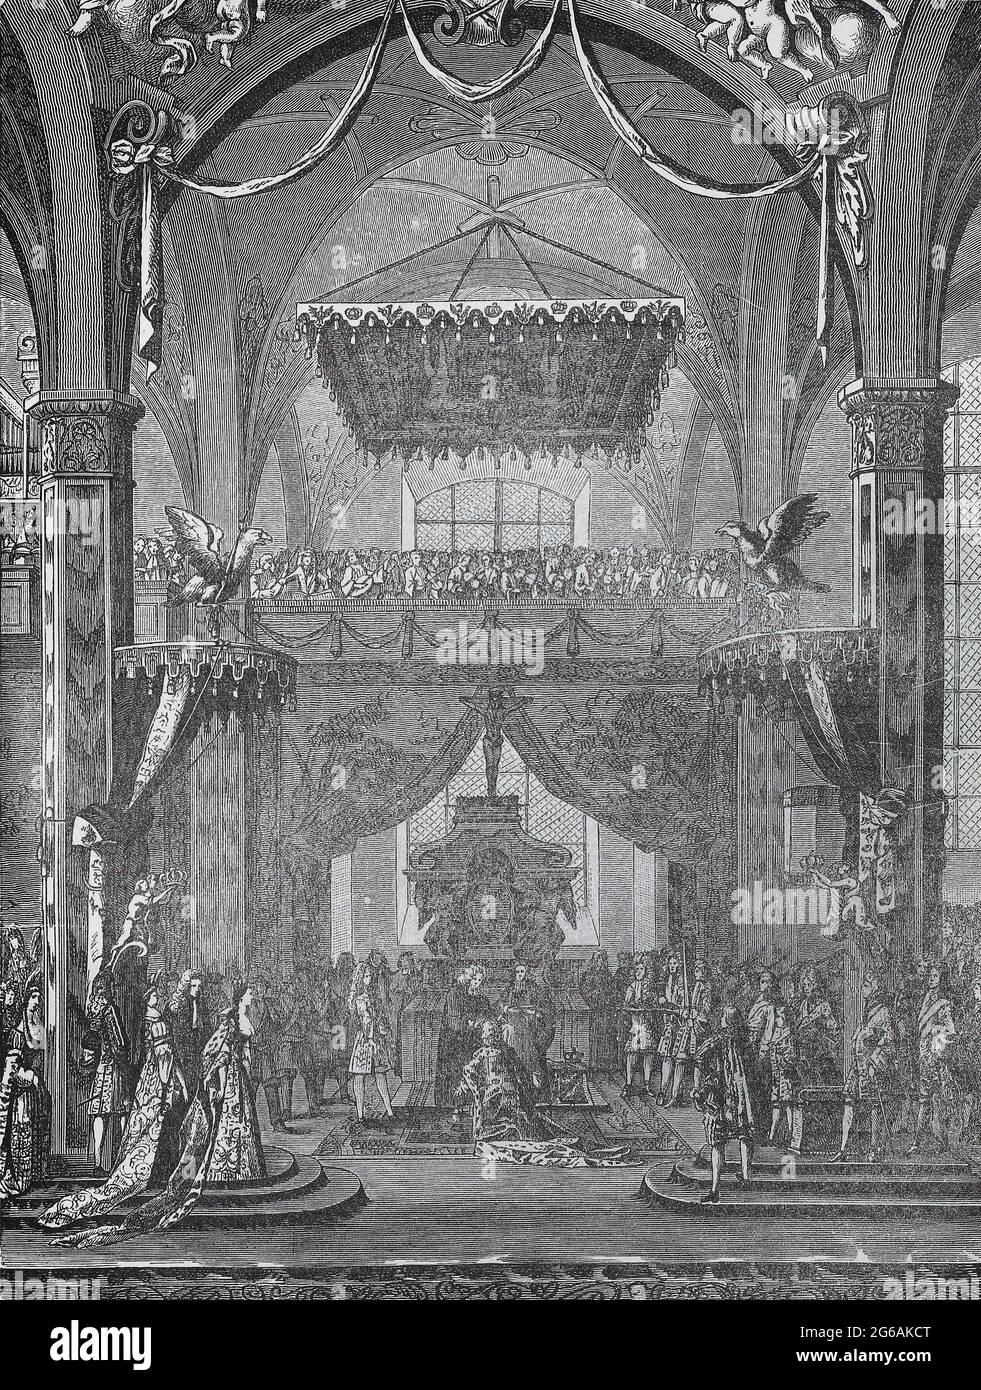 Сoronation of Frederick III January 18, 1701 - Elector of Brandenburg, first king of Prussia. Stock Photo